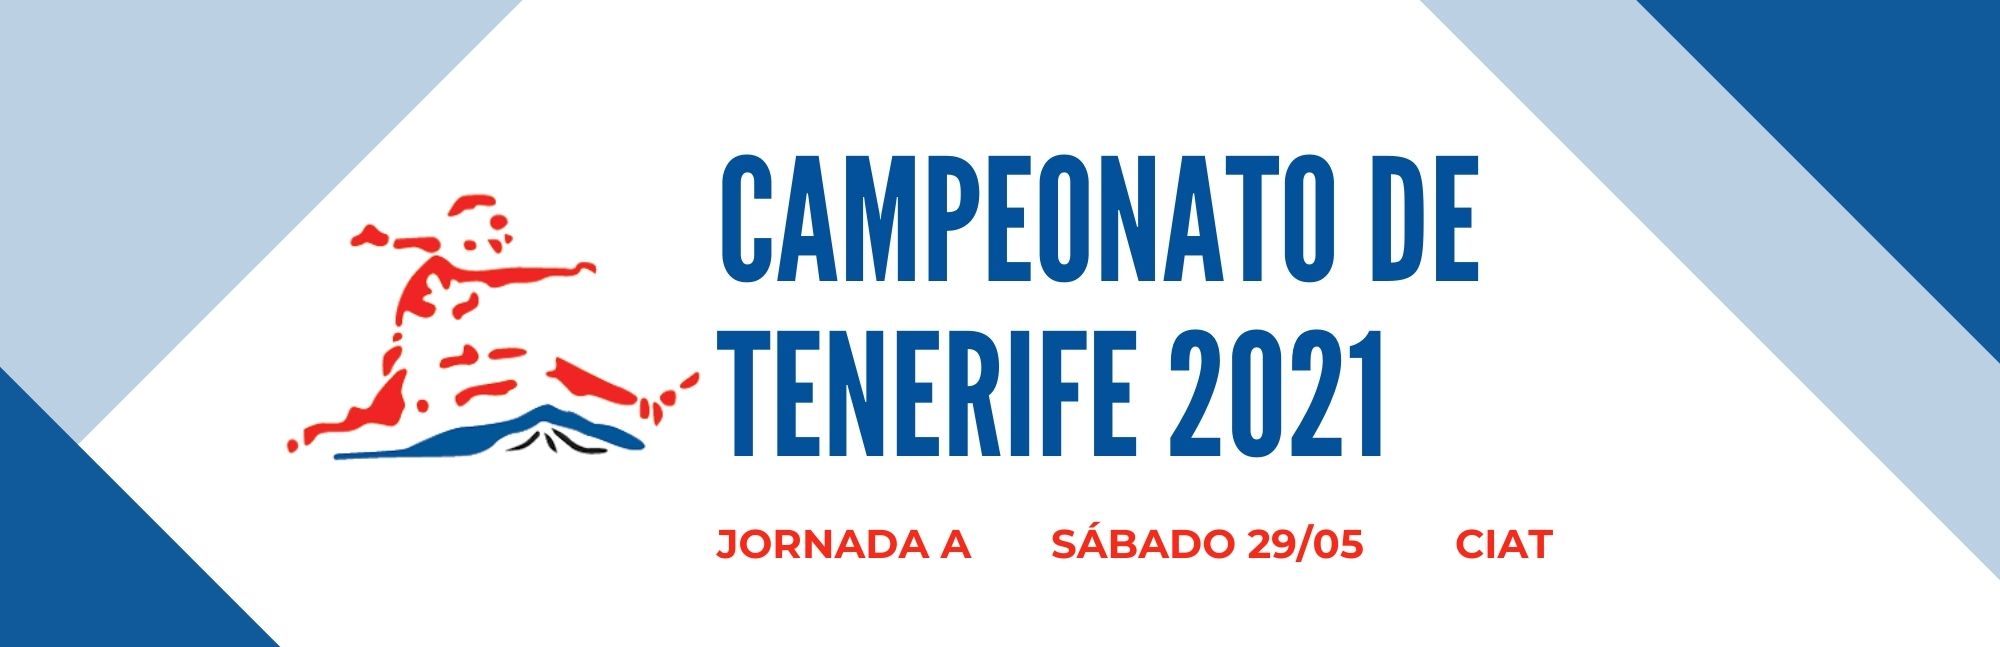 Campeonato de Tenerife 2021